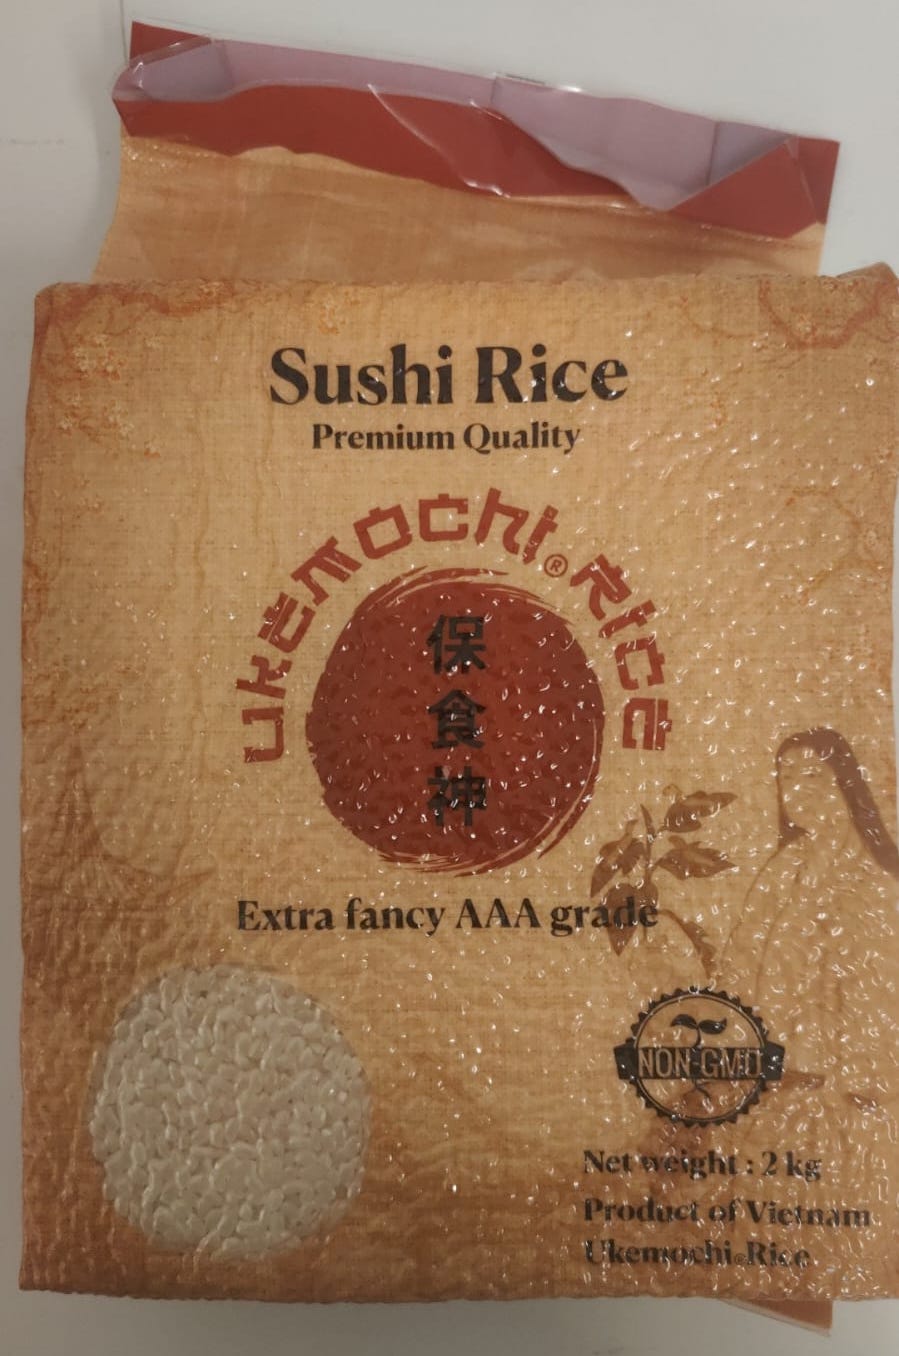 Ukemochi Sushi Rice Vietnam 2Kg - reddotgreendot